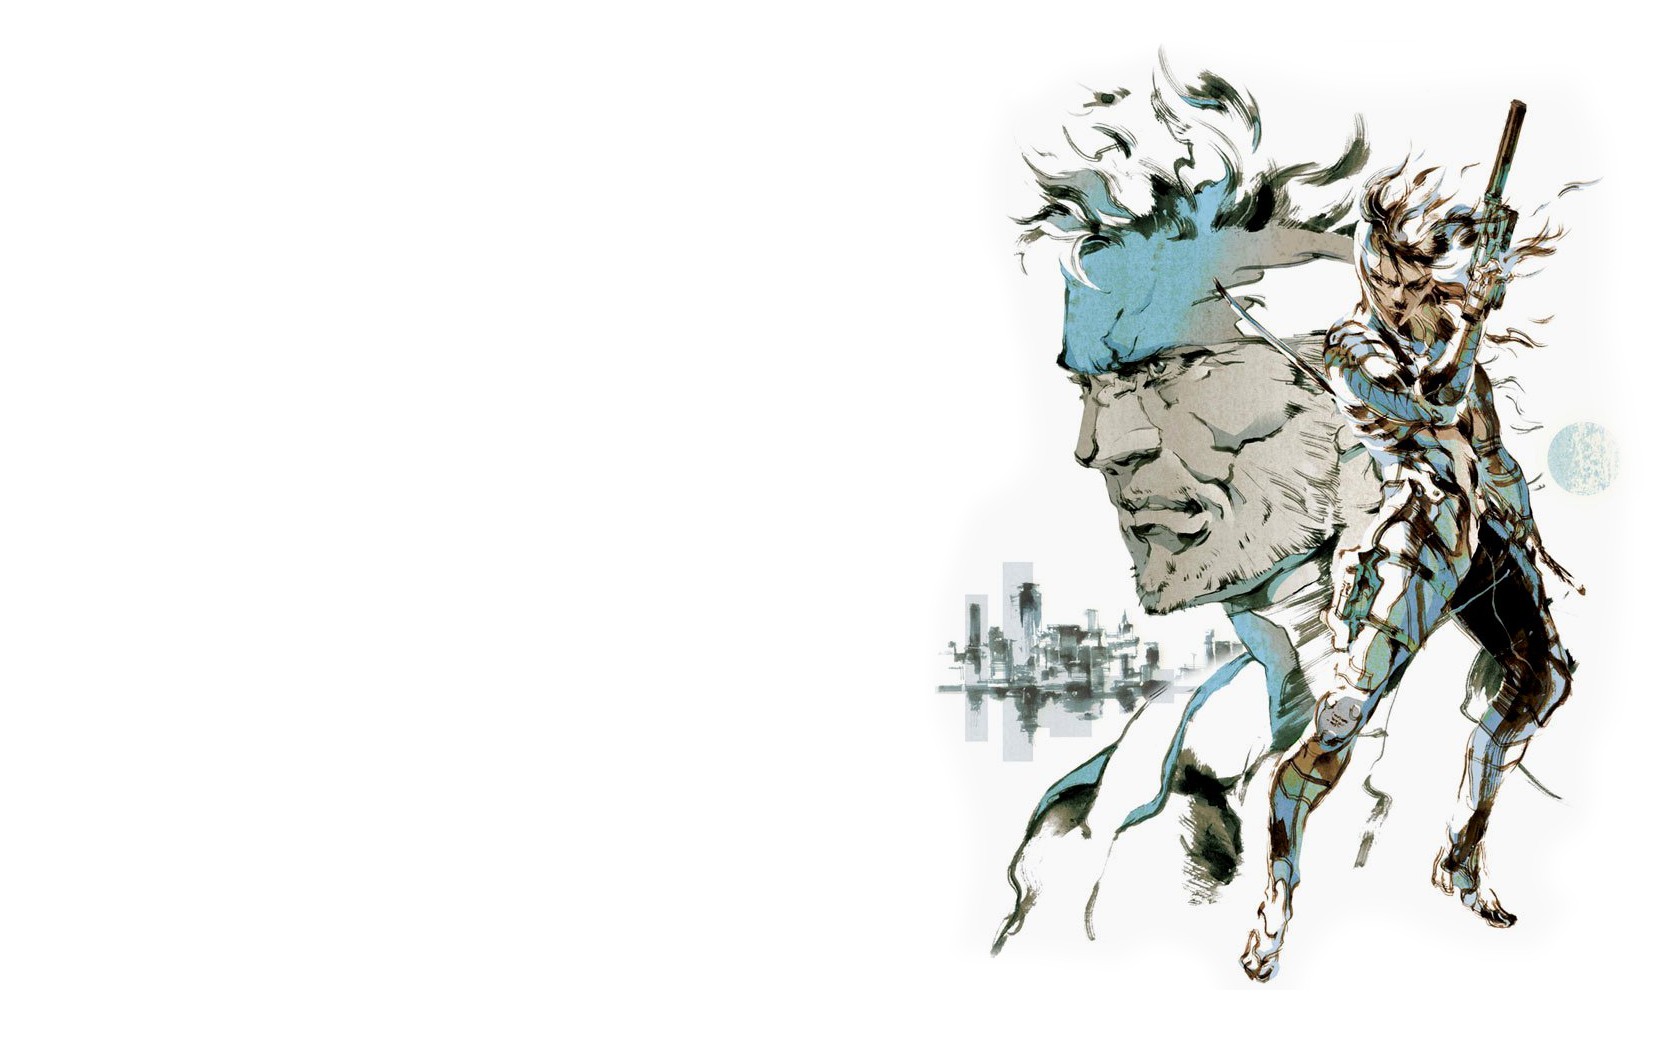 Metal Gear Metal Gear Solid Solid Snake Raiden Artwork Video Games Concept Art Metal Gear Solid 2 Cy 1680x1050